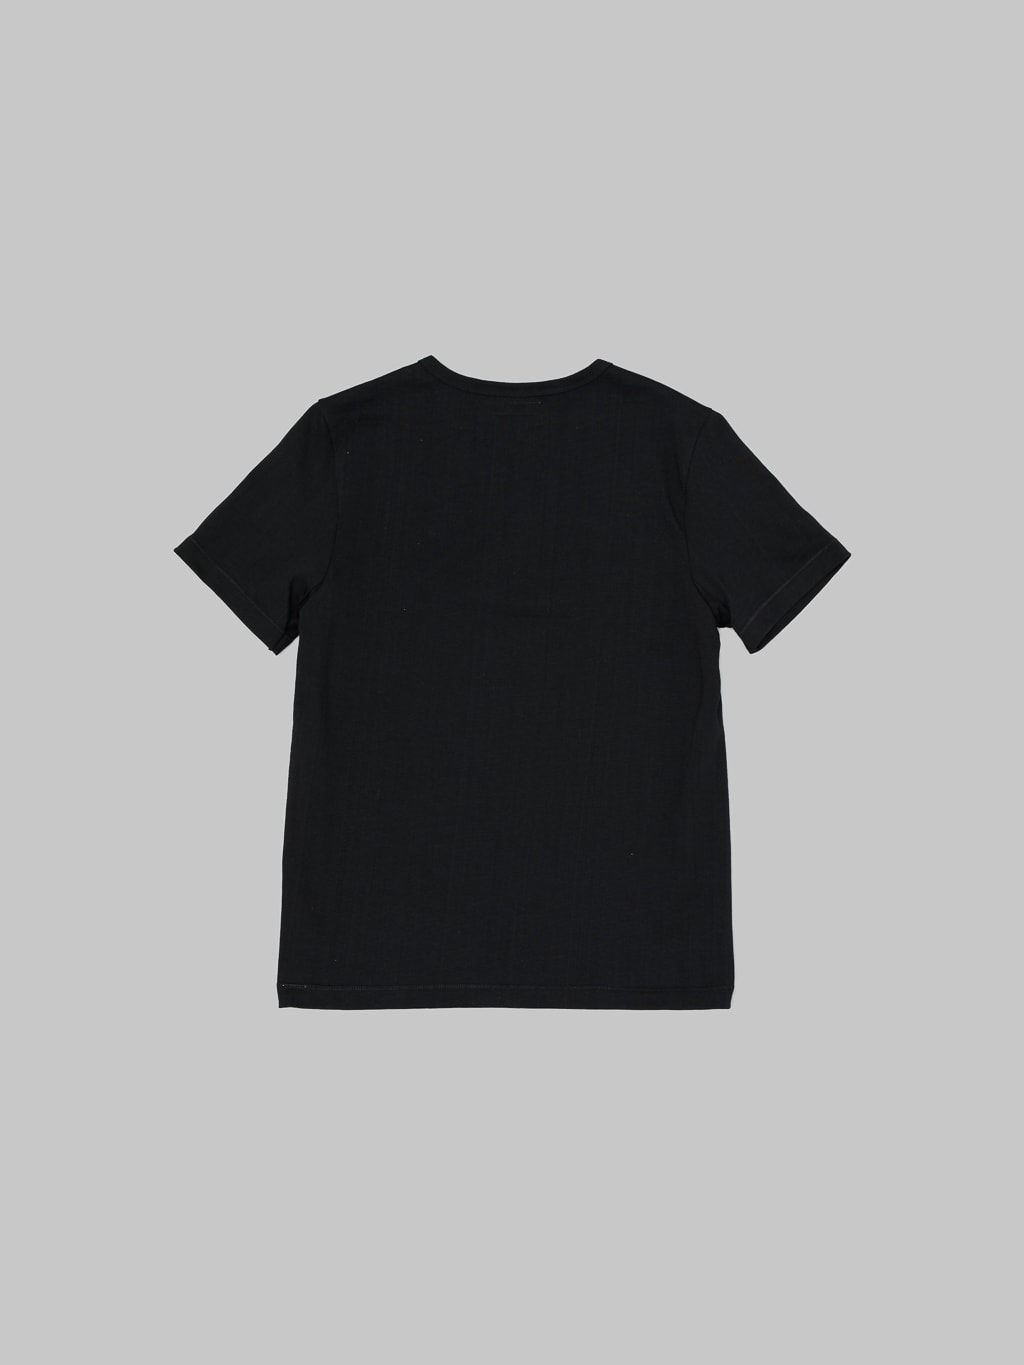 merz b schwanen good originals loopwheeled Tshirt classic fit black back